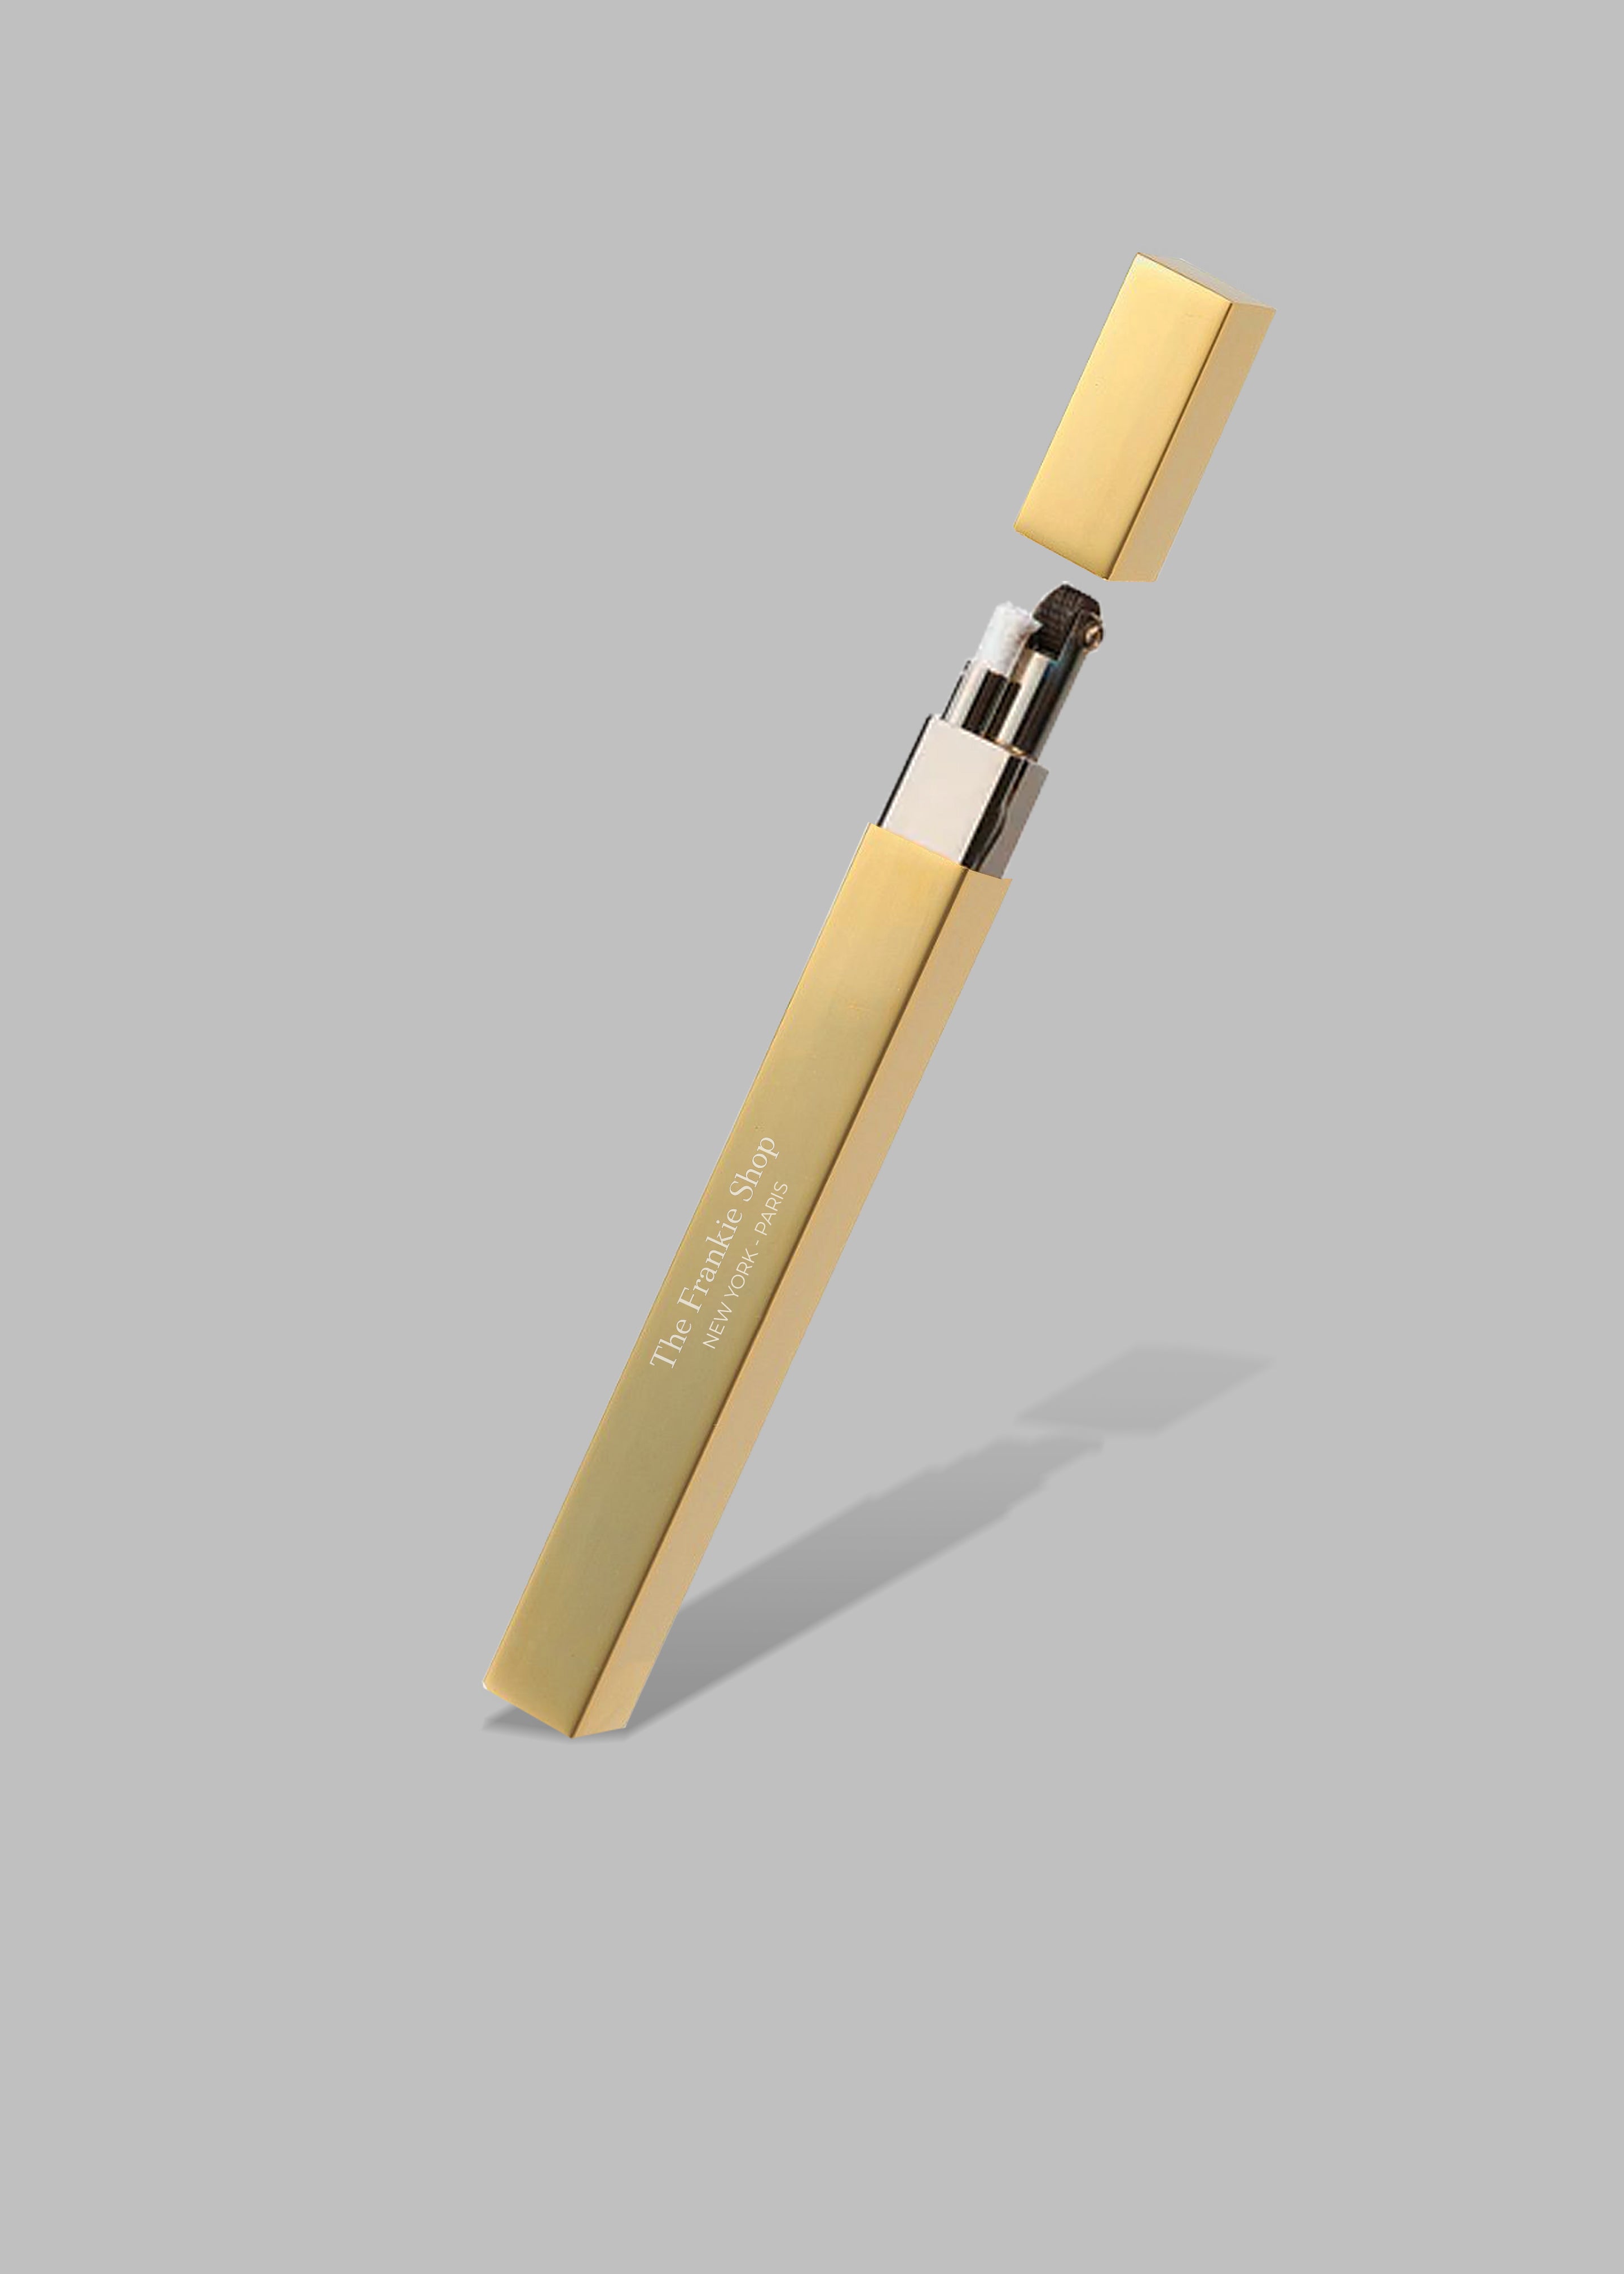 TFS Lighter - Gold - 2